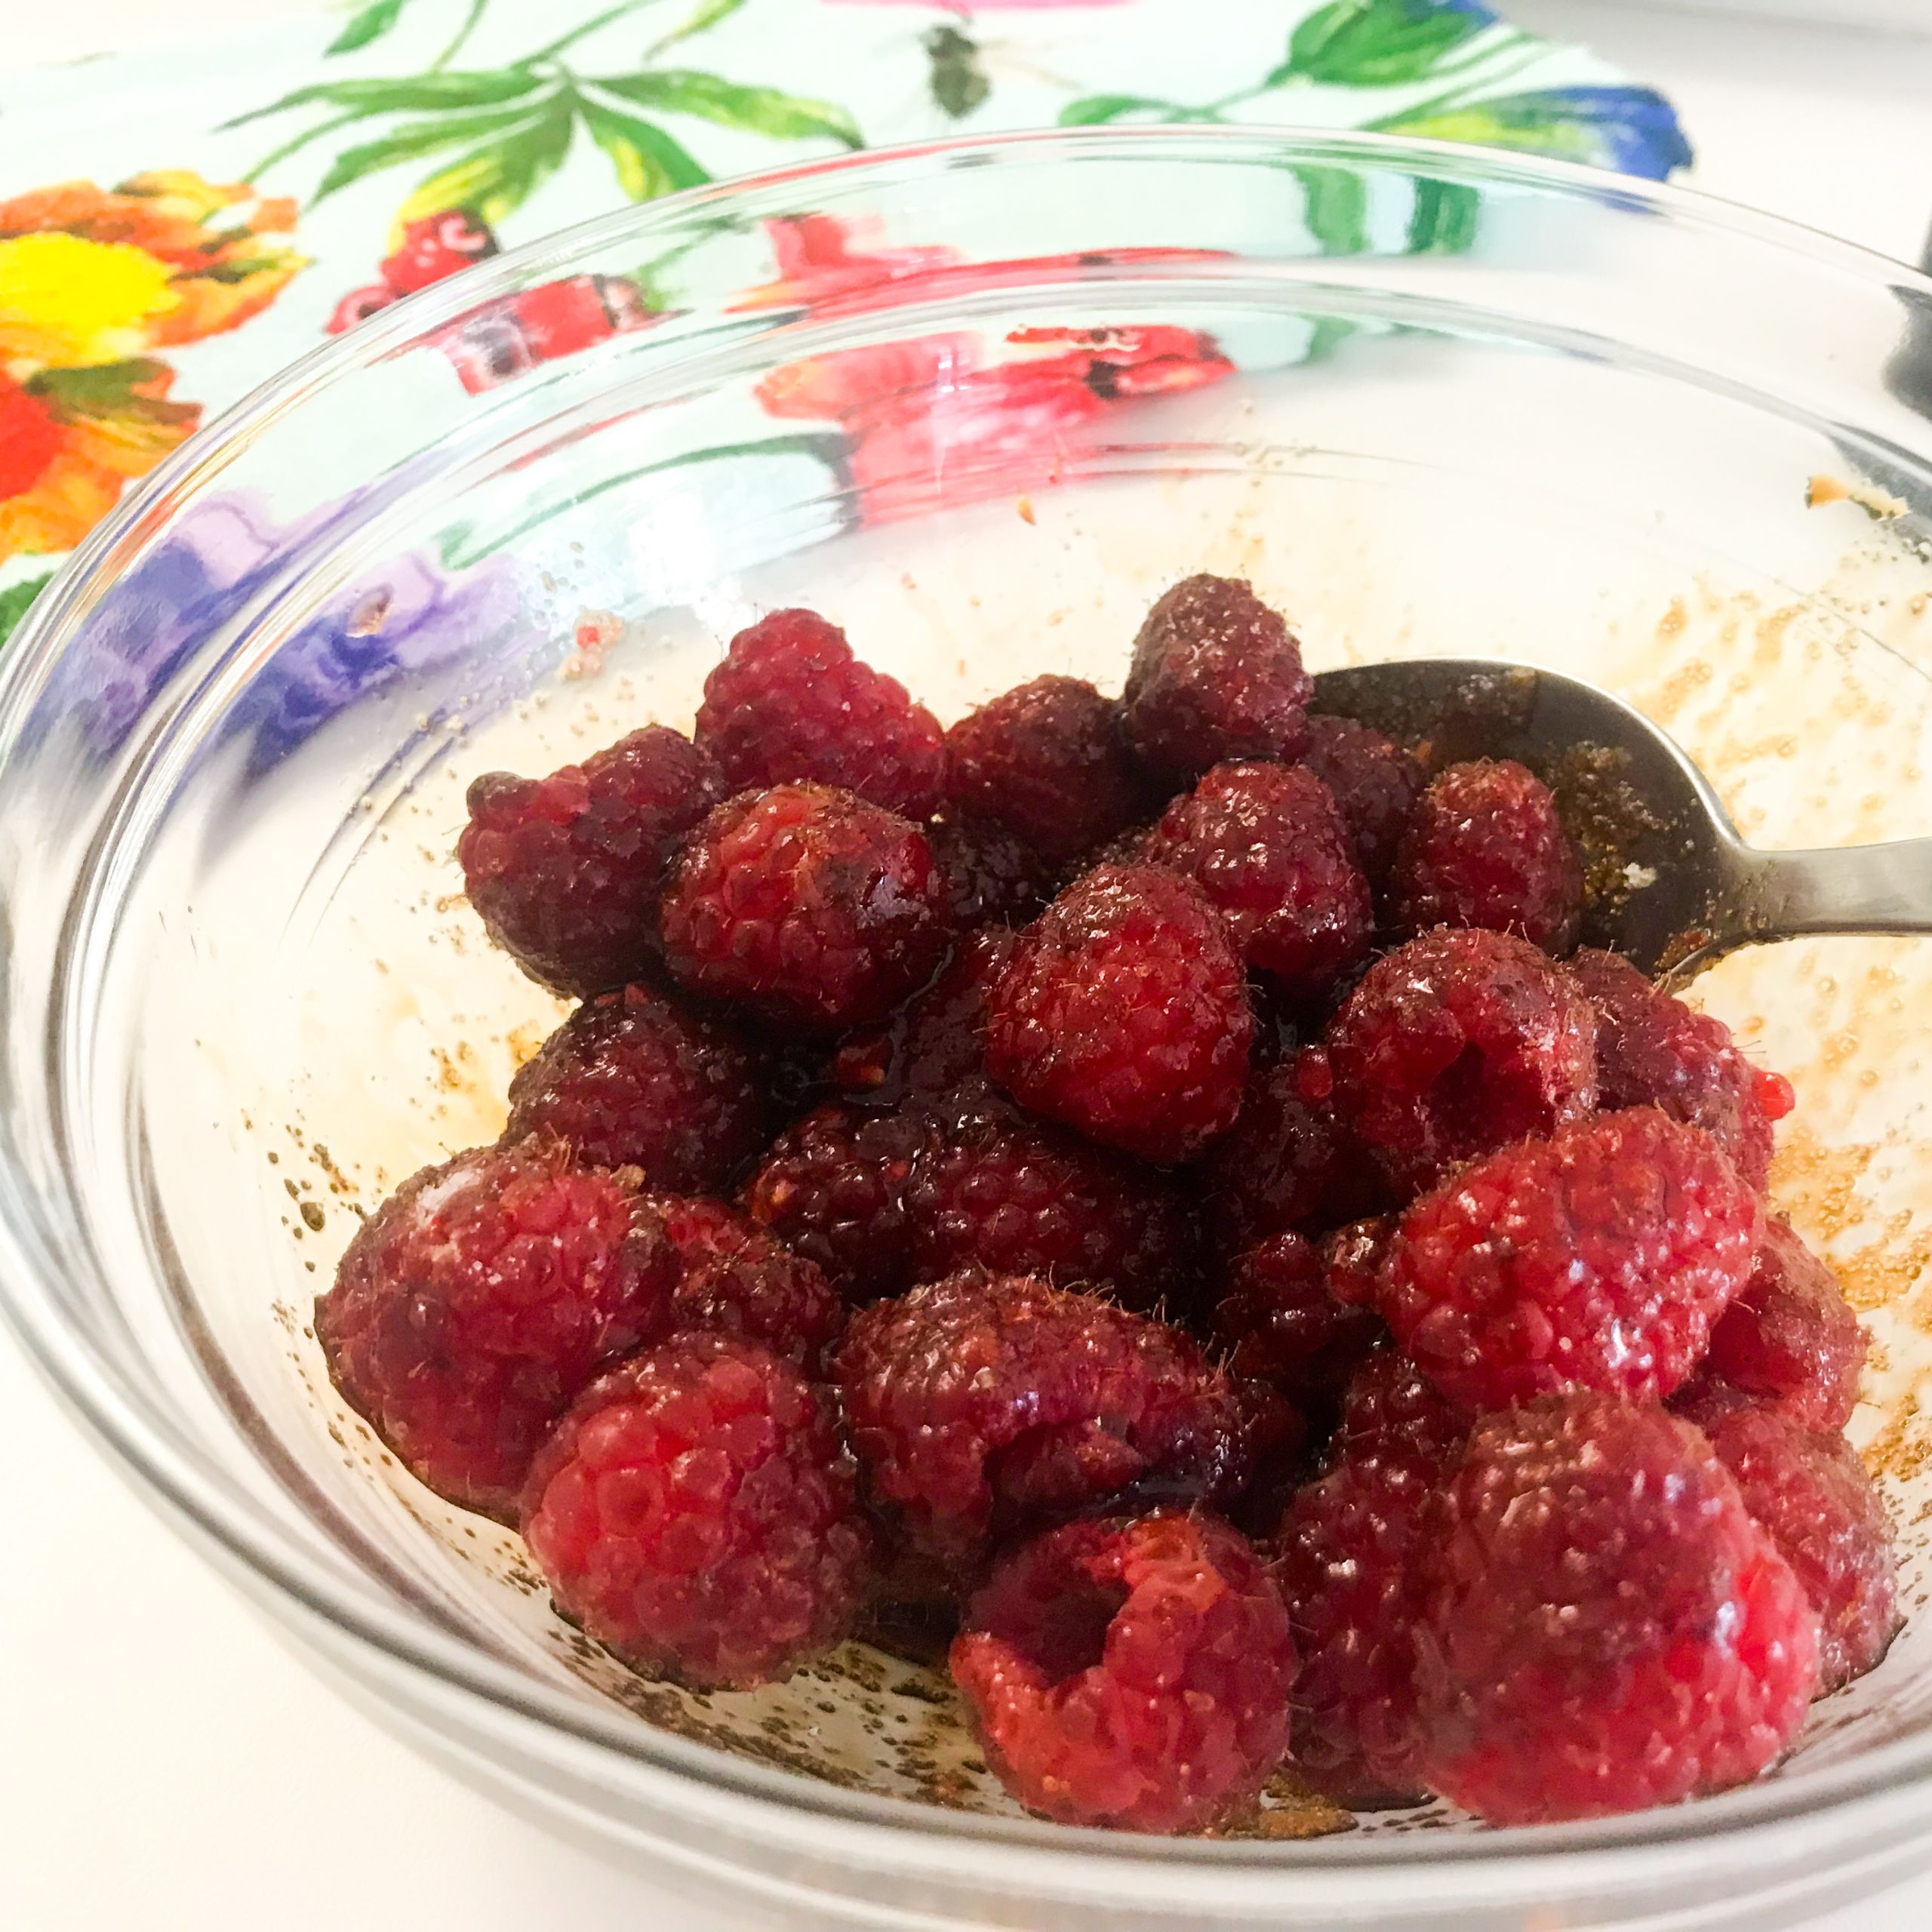 bowl of raspberries with sugar and balsamic vinegar